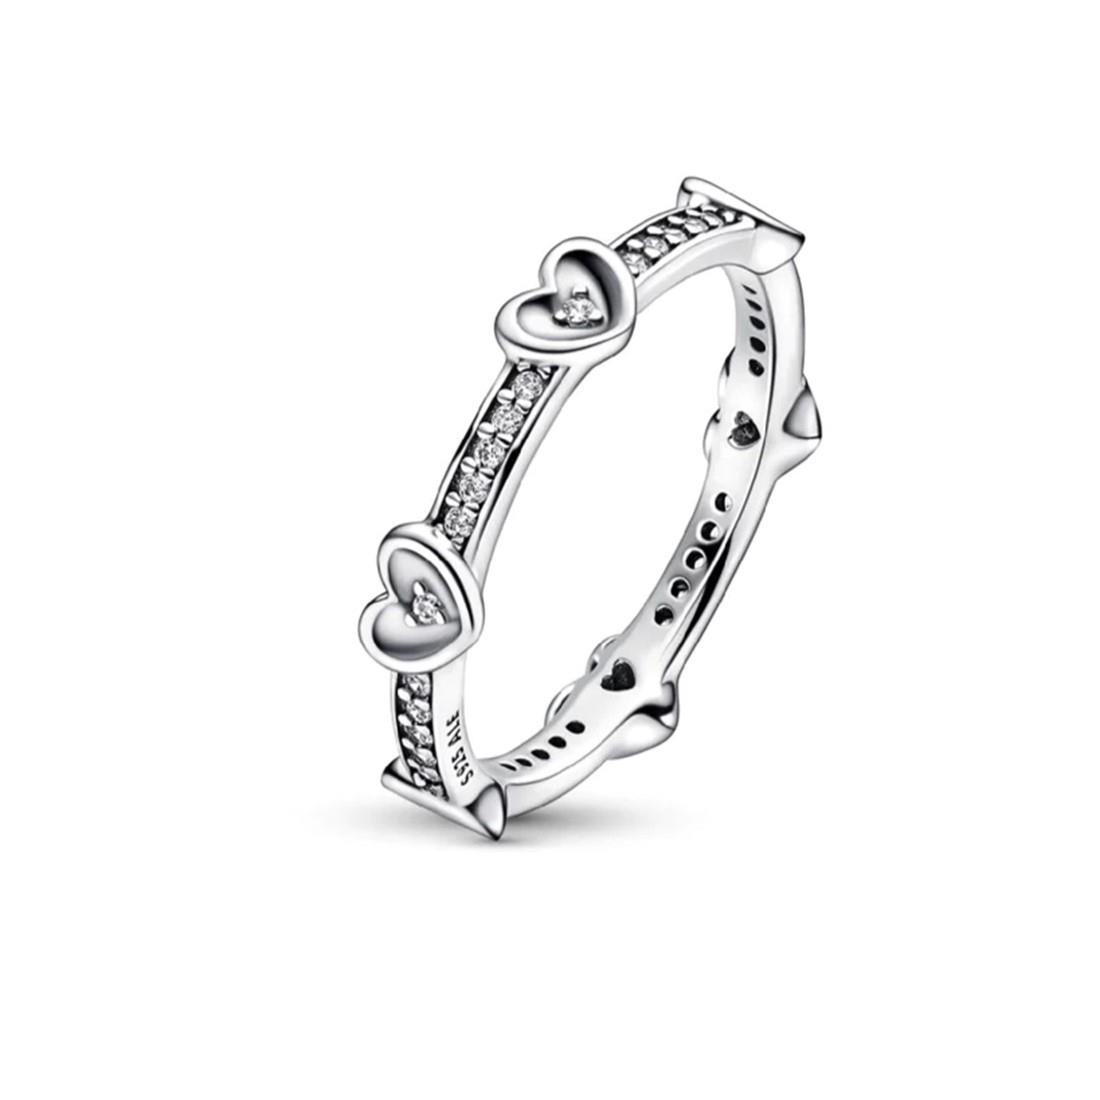 Pandora Shining Hearts ring in silver - PANDORA